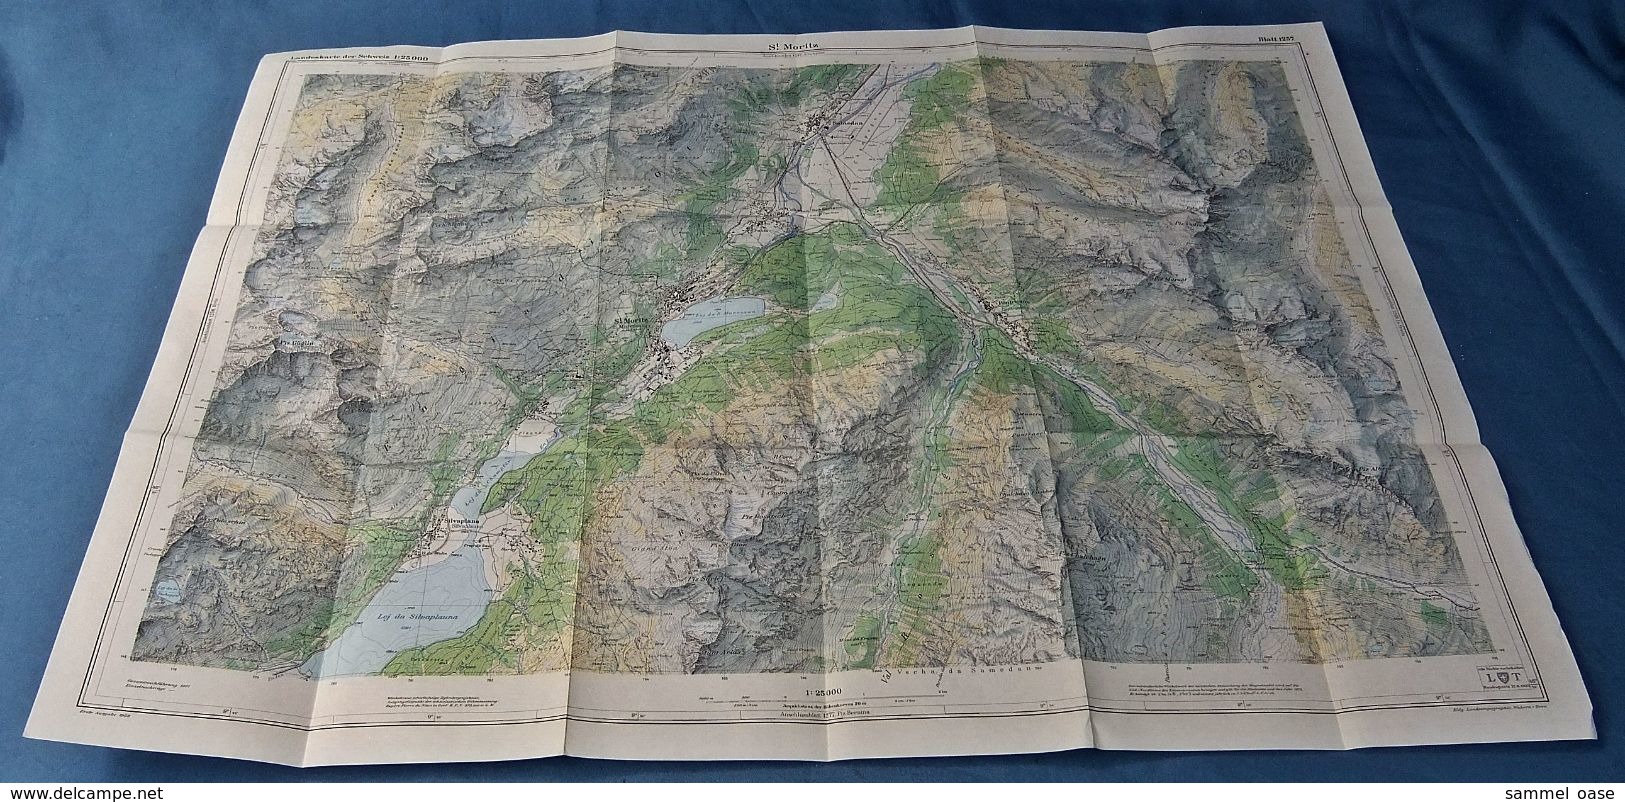 Topographische Karte / Landeskarte Der Schweiz  -  St. Moritz  - Blatt 1257  -  1:25 000  -  1958 - Mappemondes